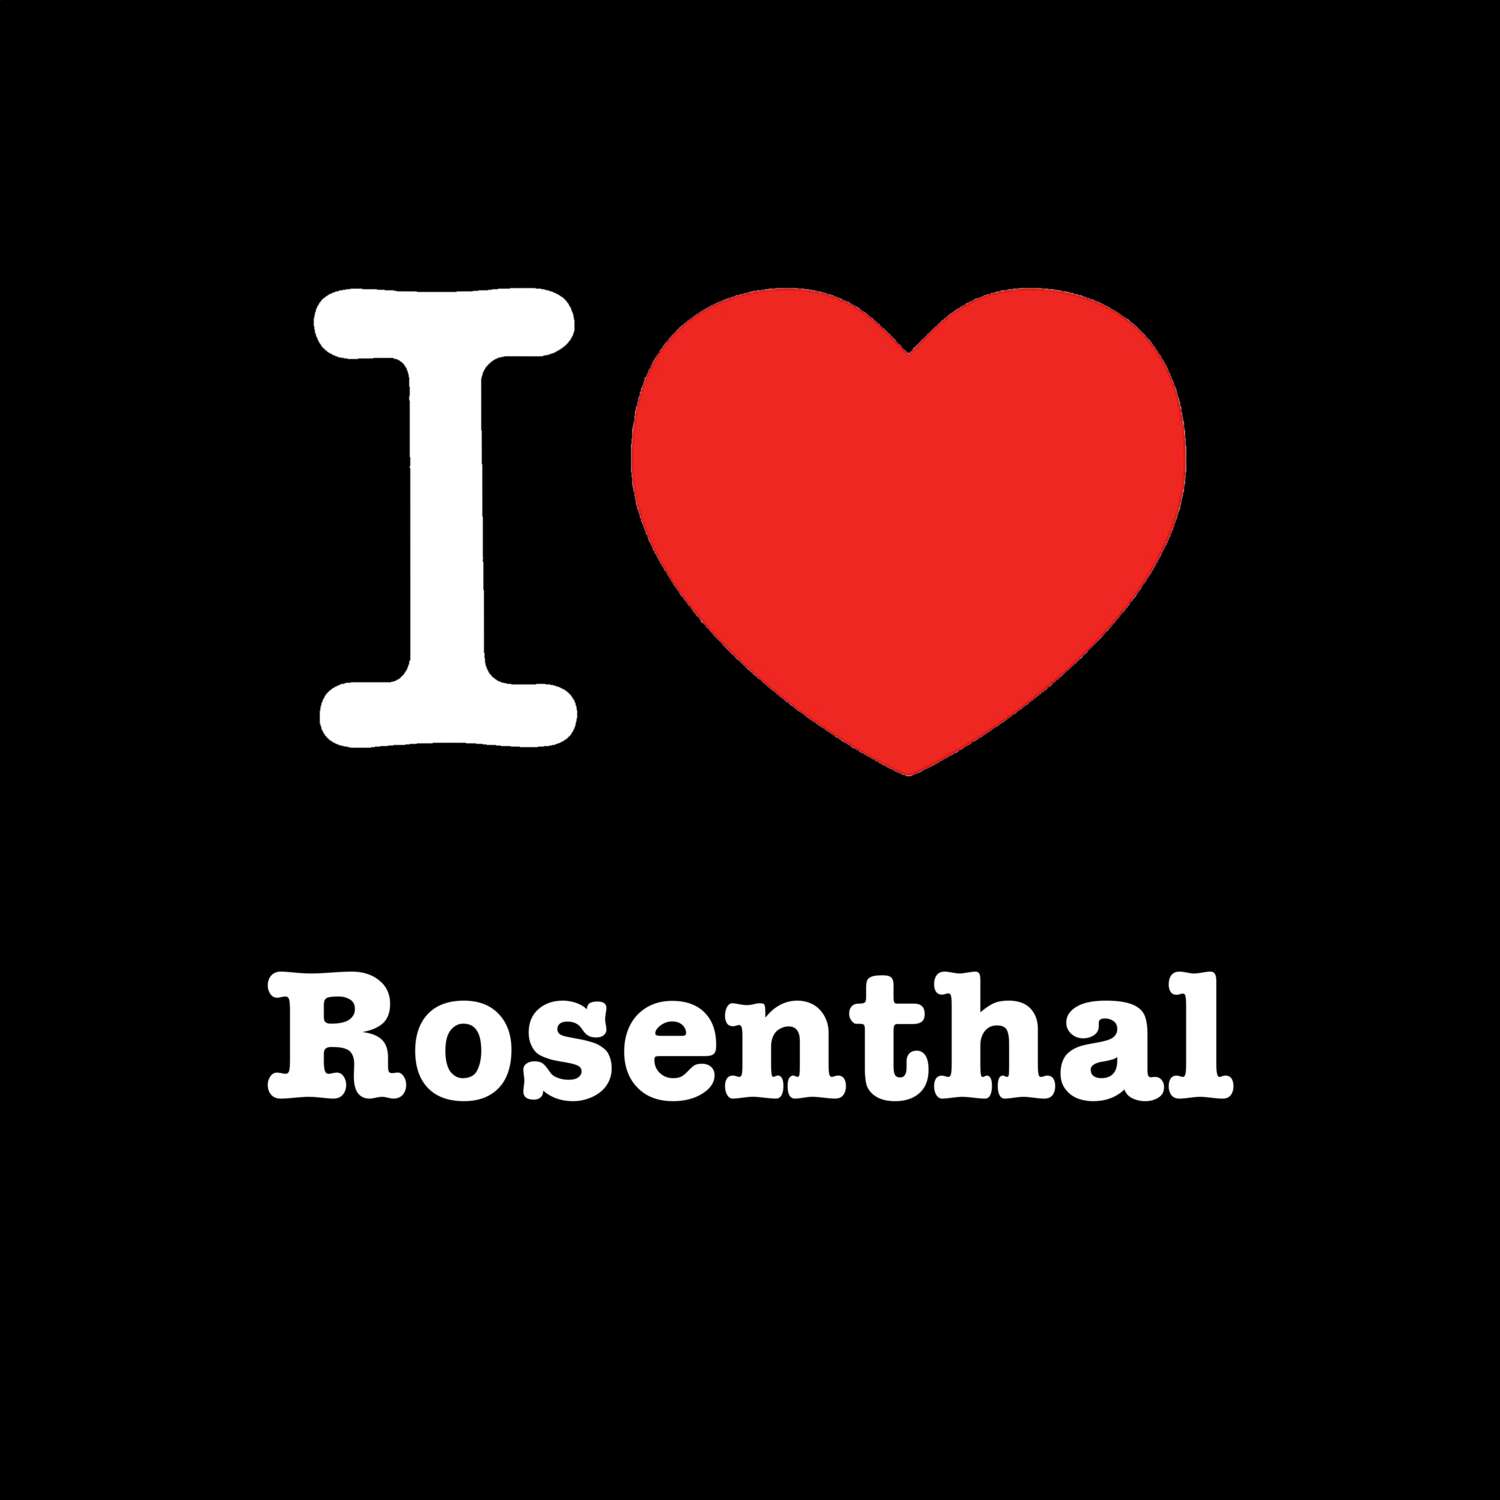 Rosenthal T-Shirt »I love«